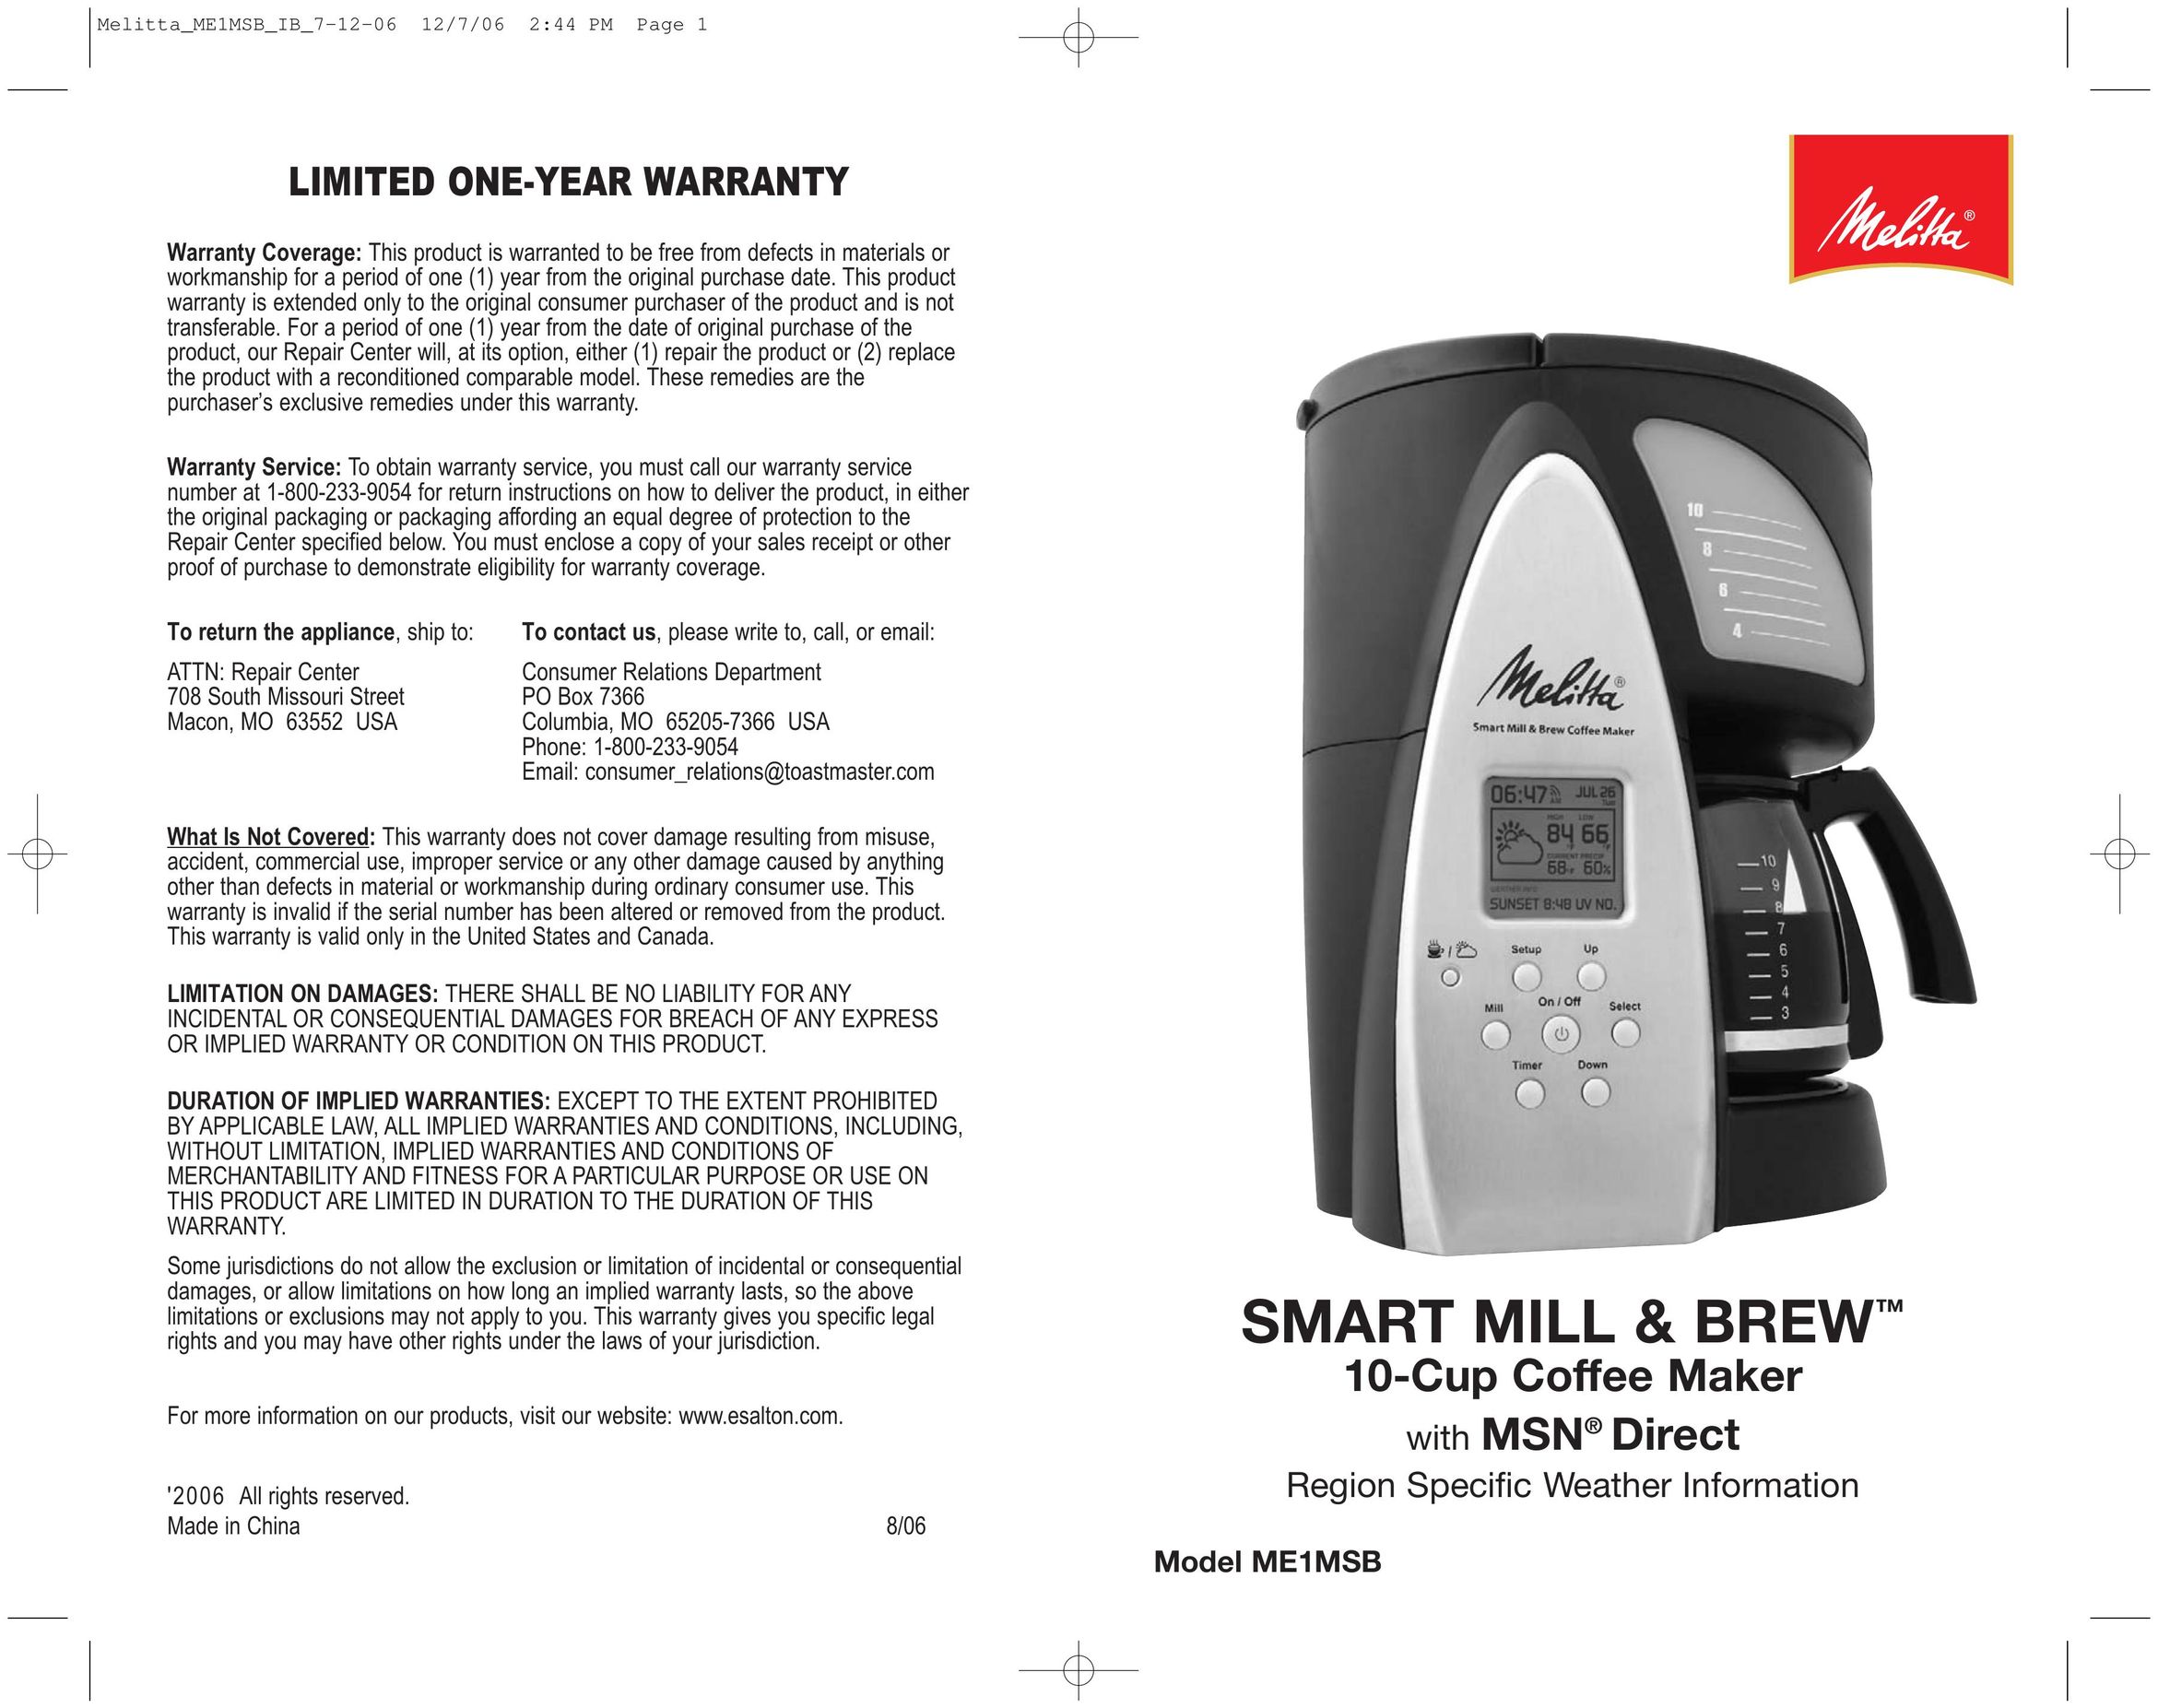 Toastmaster ME1MSB Coffeemaker User Manual